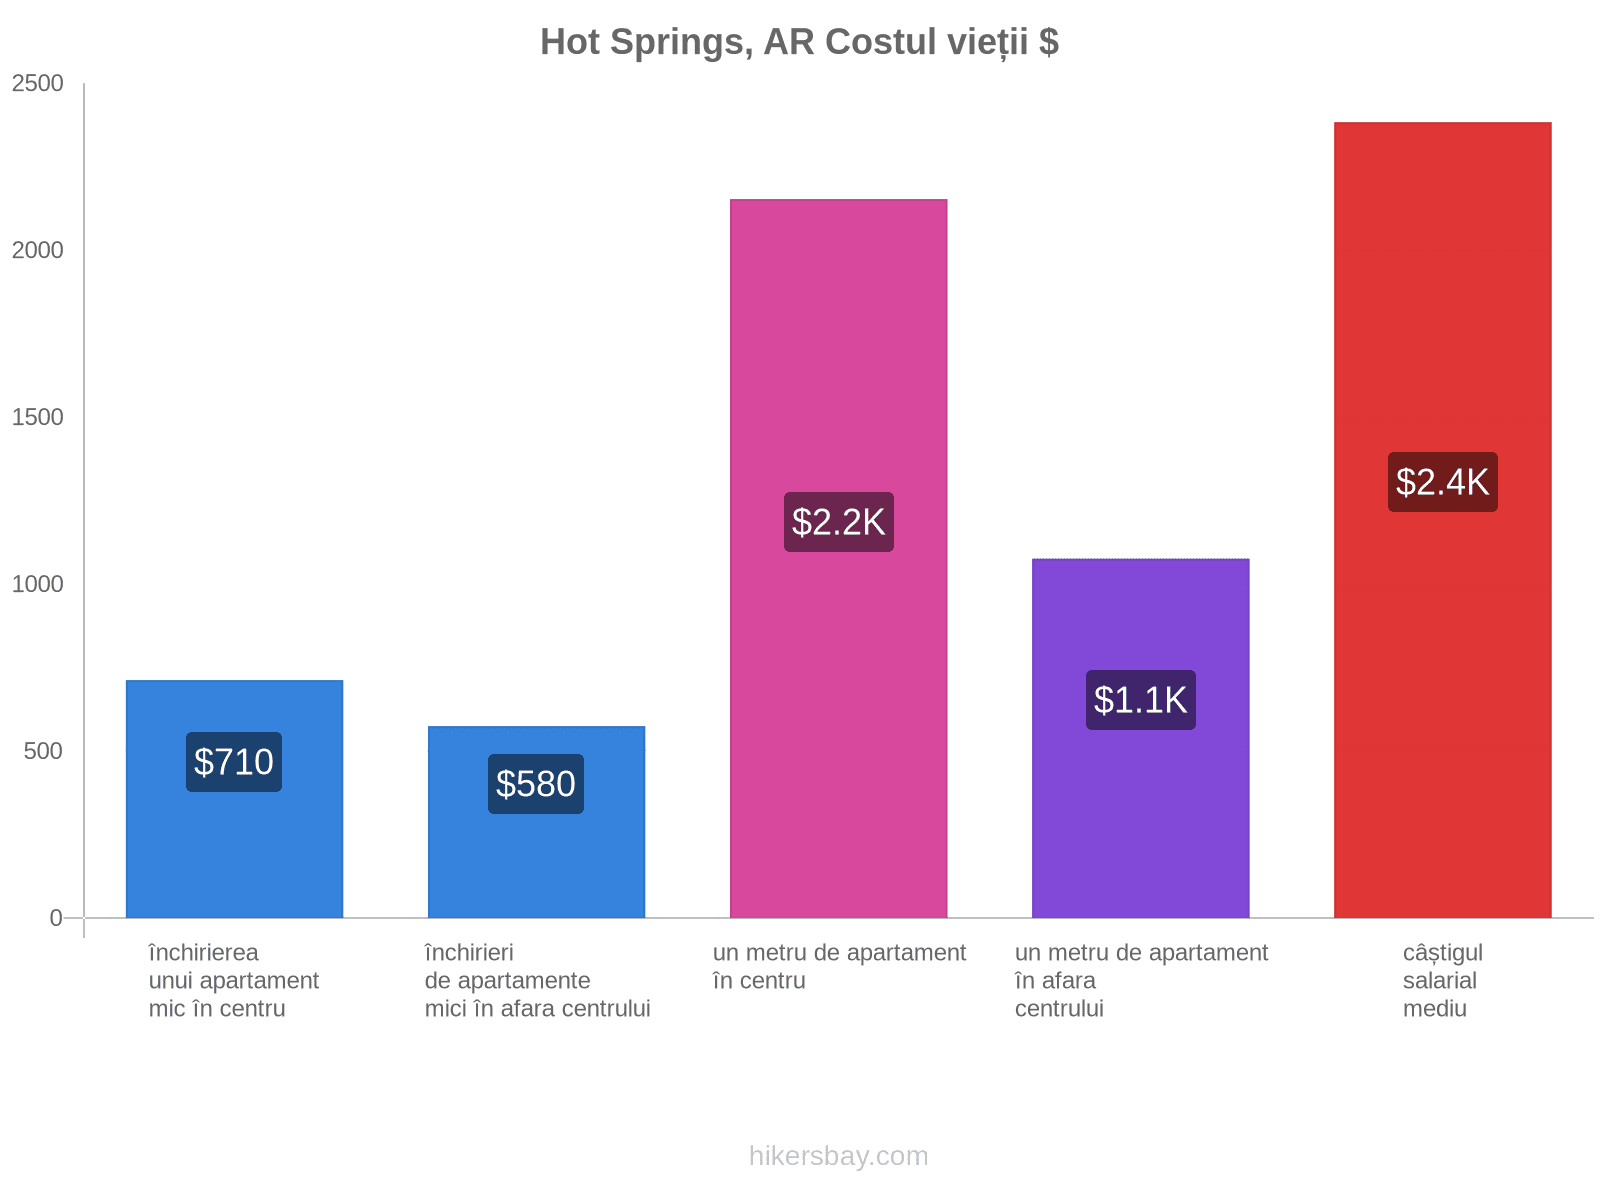 Hot Springs, AR costul vieții hikersbay.com